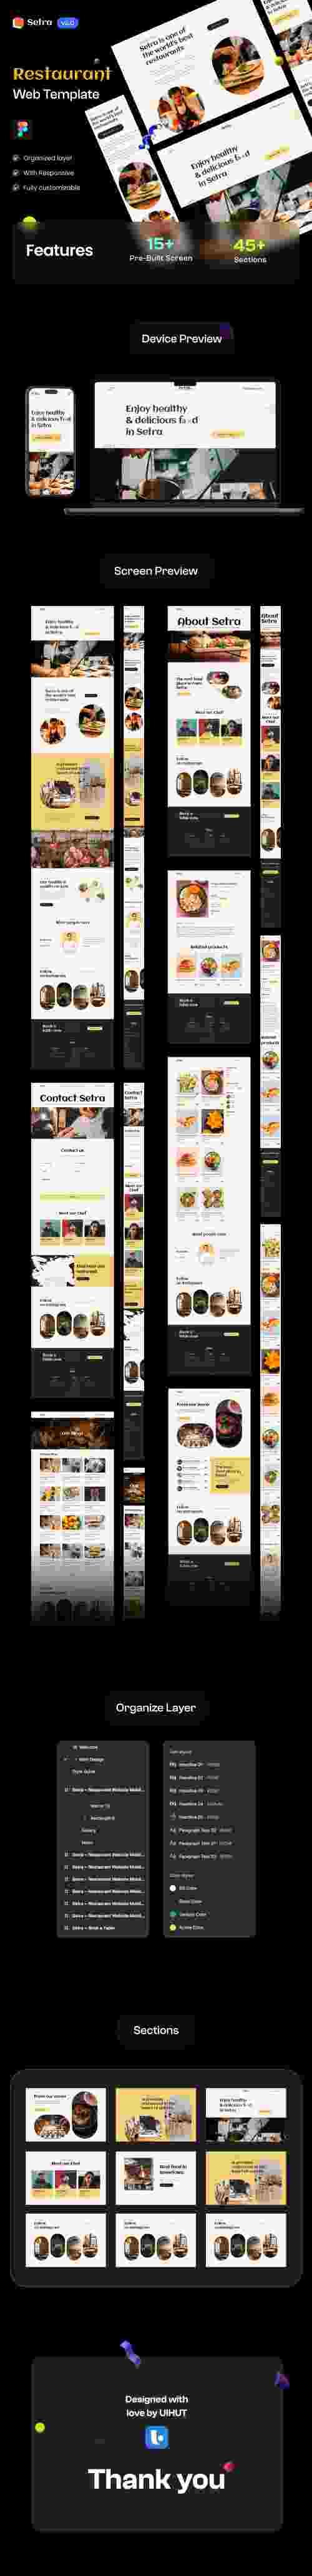 UIHut - Food Website Template Design - 24404